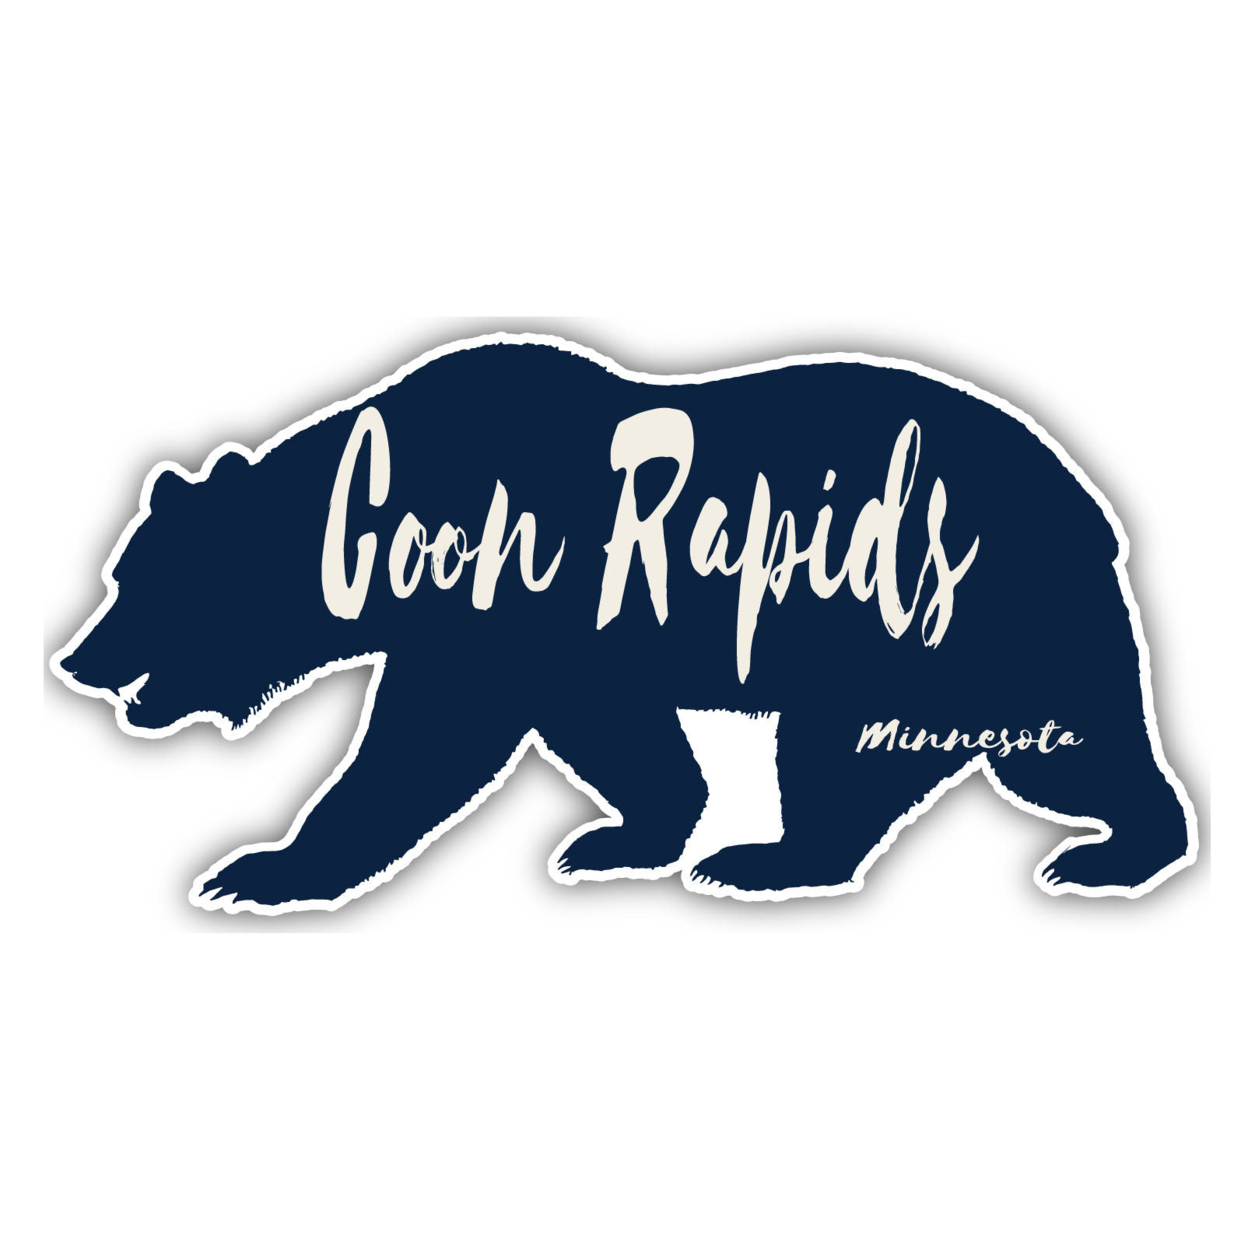 Coon Rapids Minnesota Souvenir Decorative Stickers (Choose Theme And Size) - Single Unit, 2-Inch, Bear